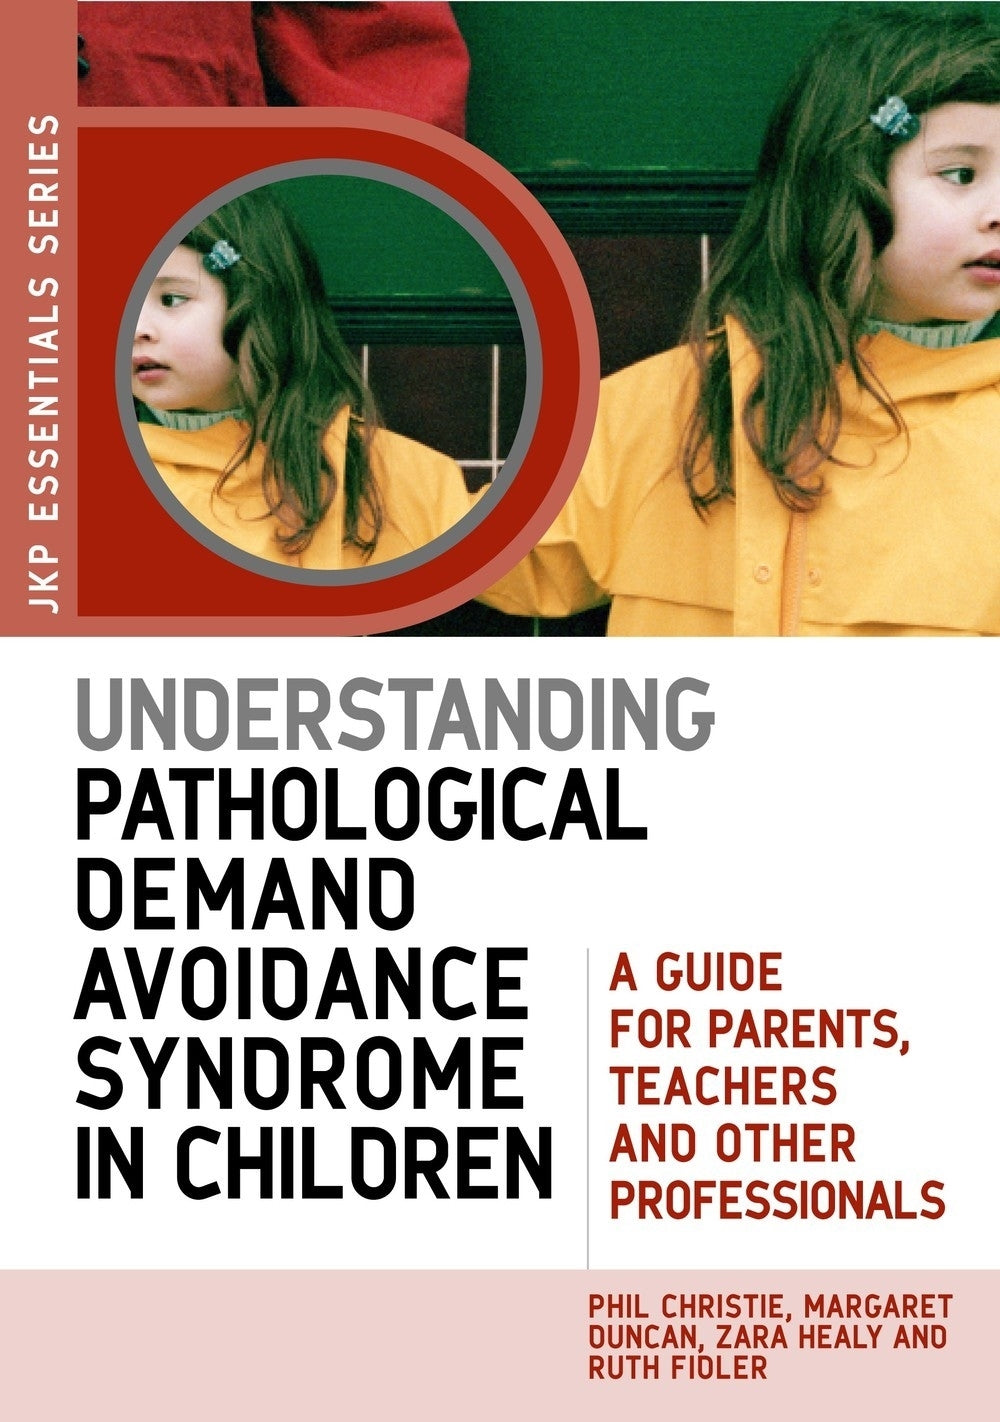 Understanding Pathological Demand Avoidance Syndrome in Children by Phil Christie, Margaret Duncan, Zara Healy, Ruth Fidler